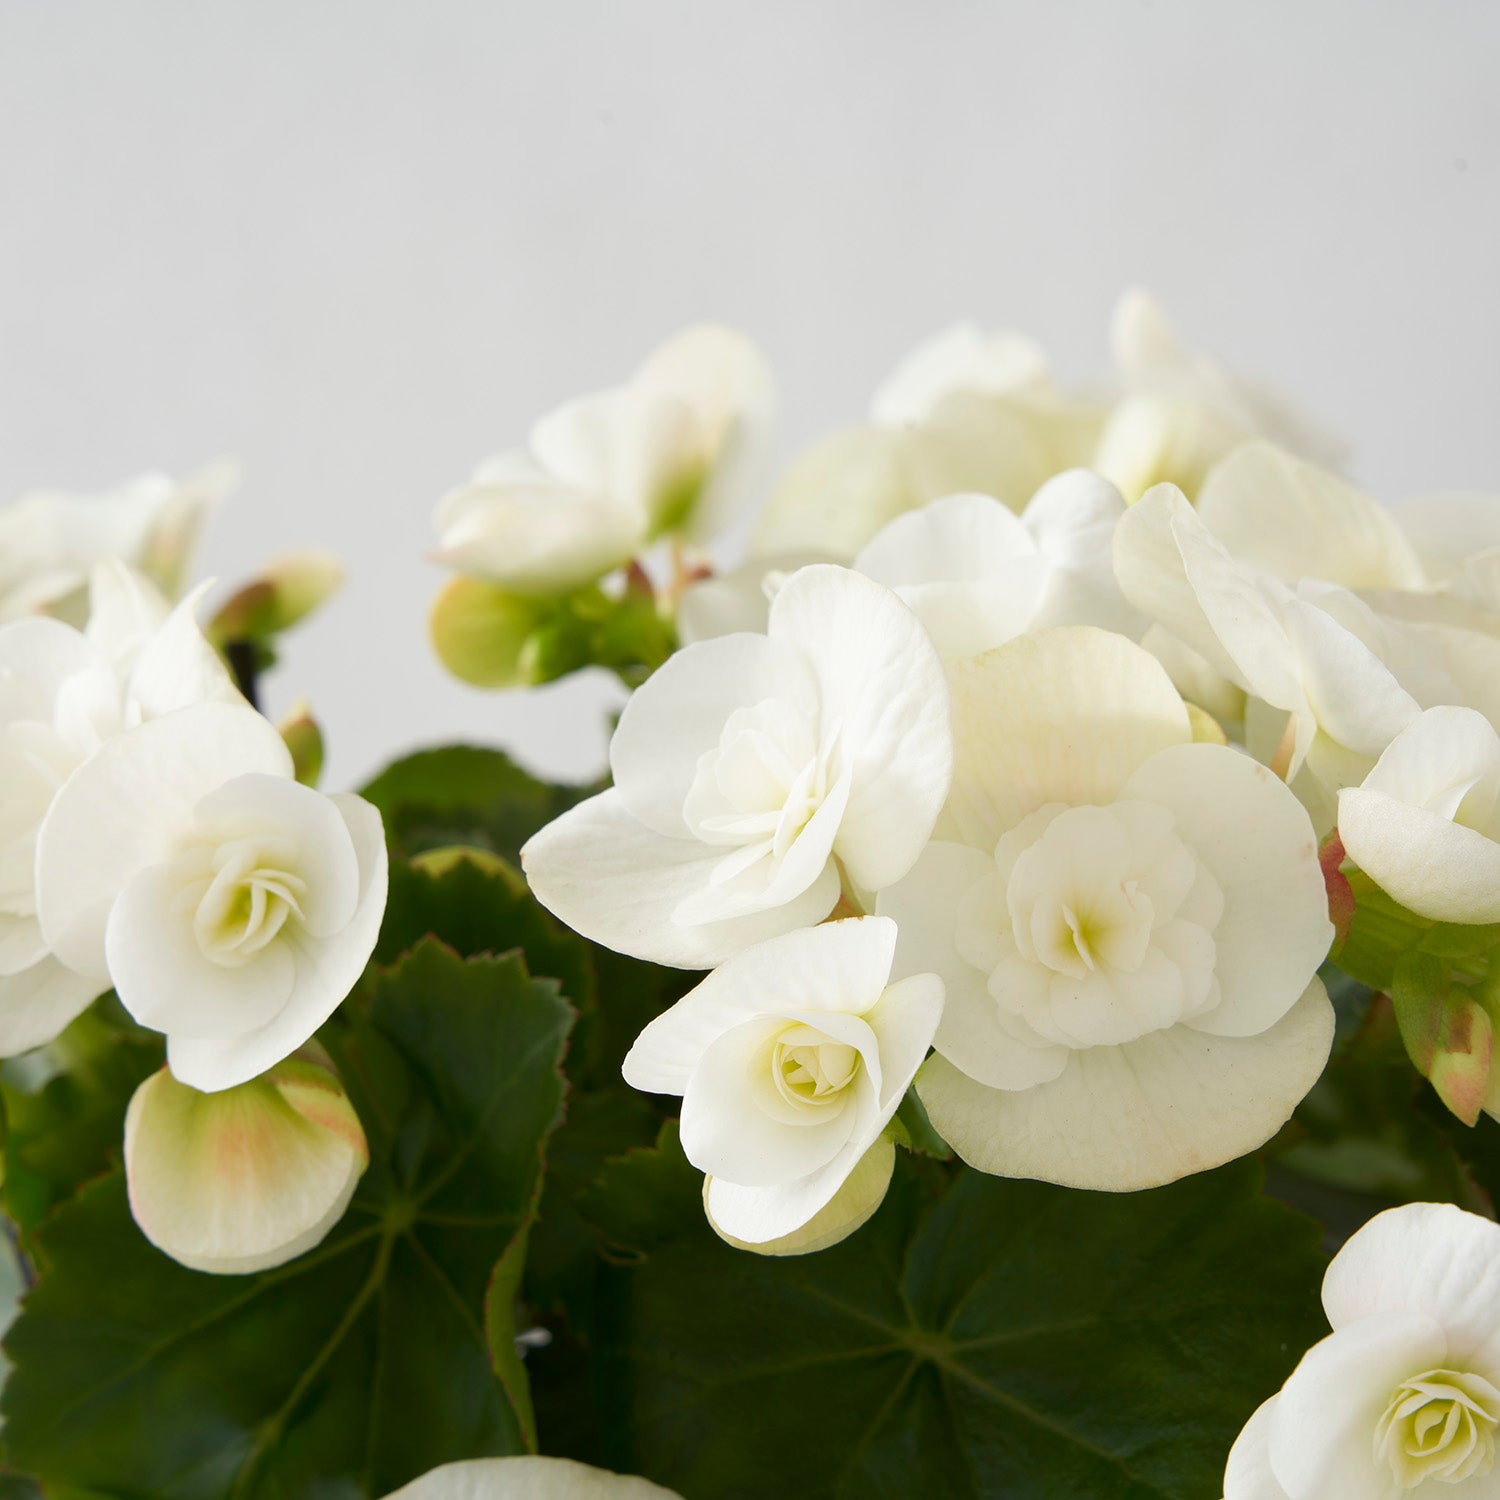 Closeup of white begonia flowers.